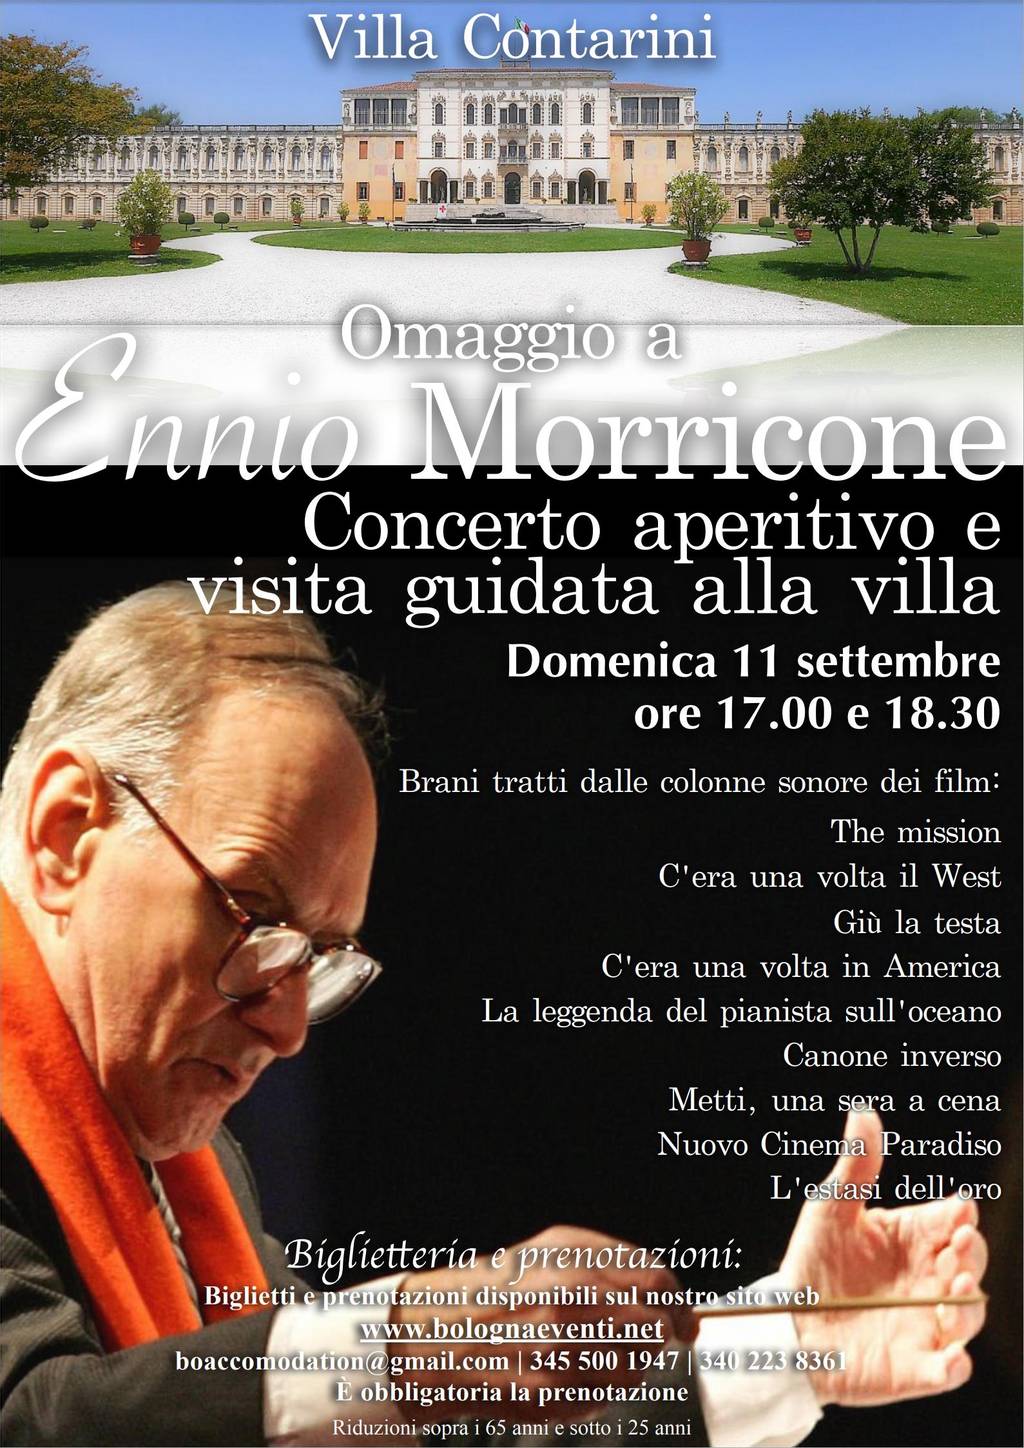 Aperitif concert - Homage to Ennio Morricone